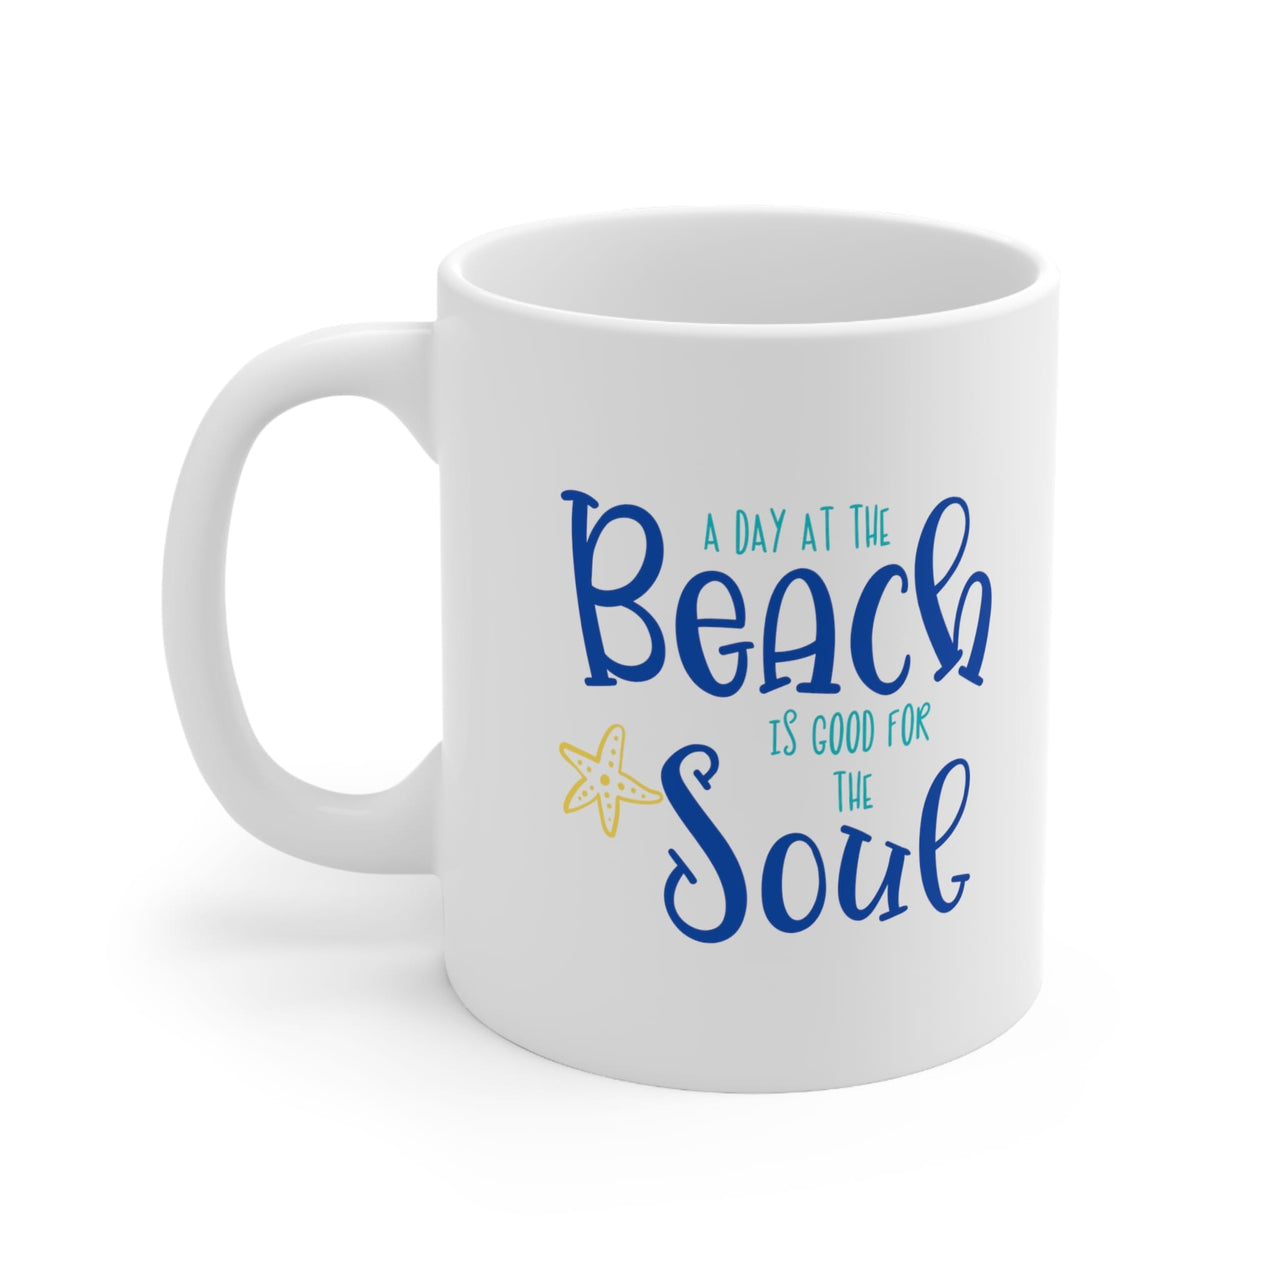 A Day at the Beach Ceramic Coffee Mug Mugs New England Trading Co   